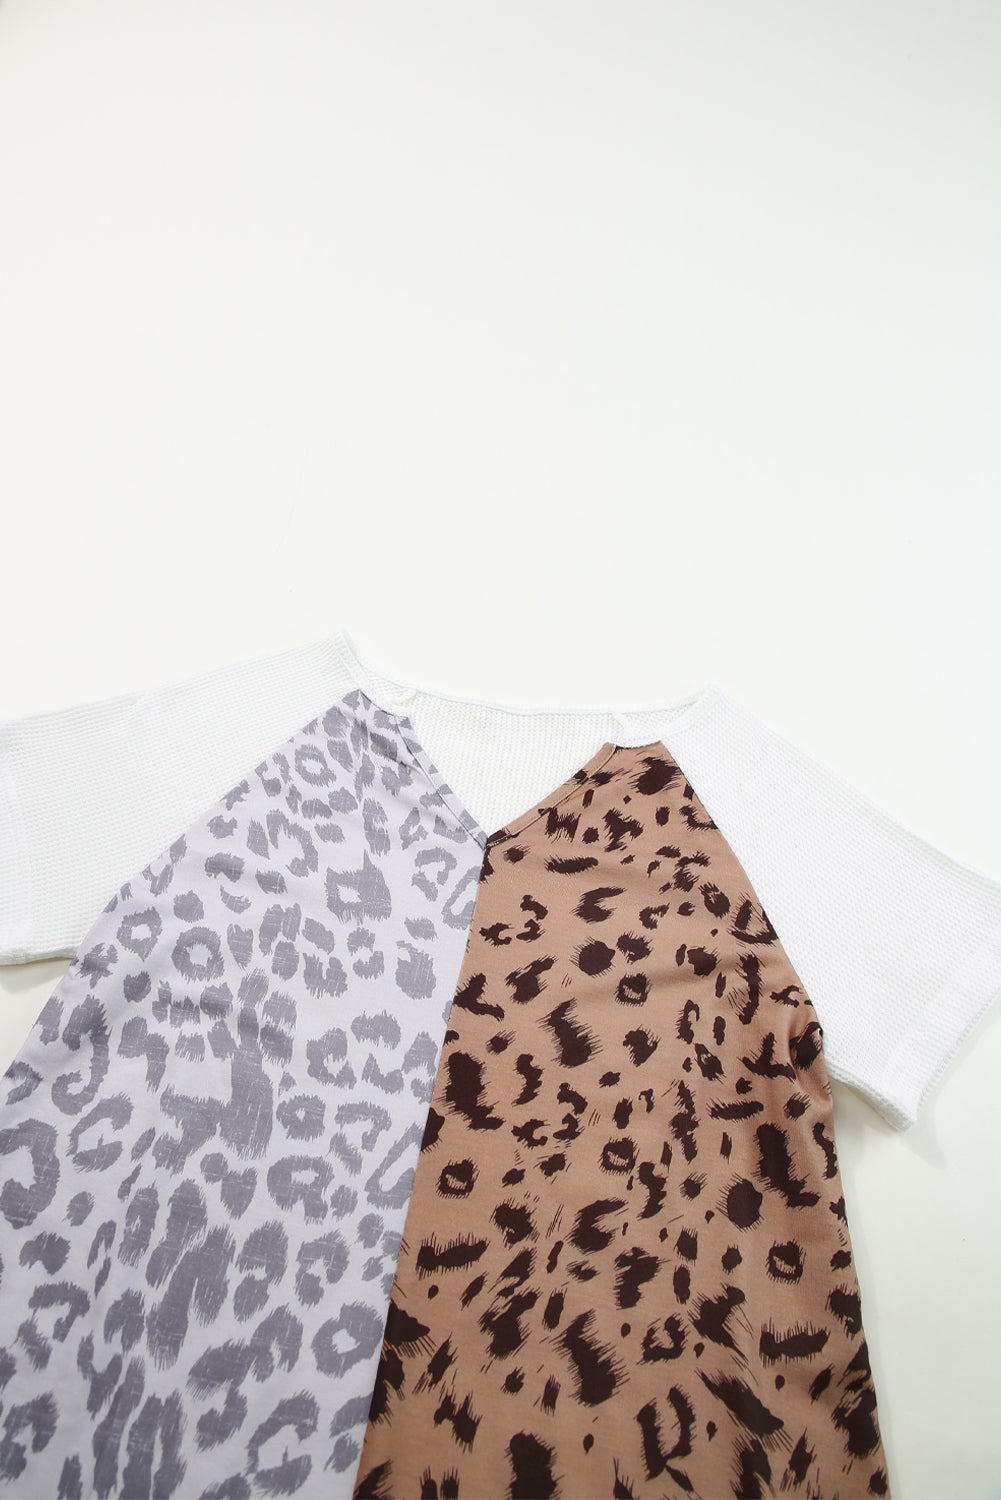 Leopard Color Block Contrast Waffle Knit Short Sleeve Top